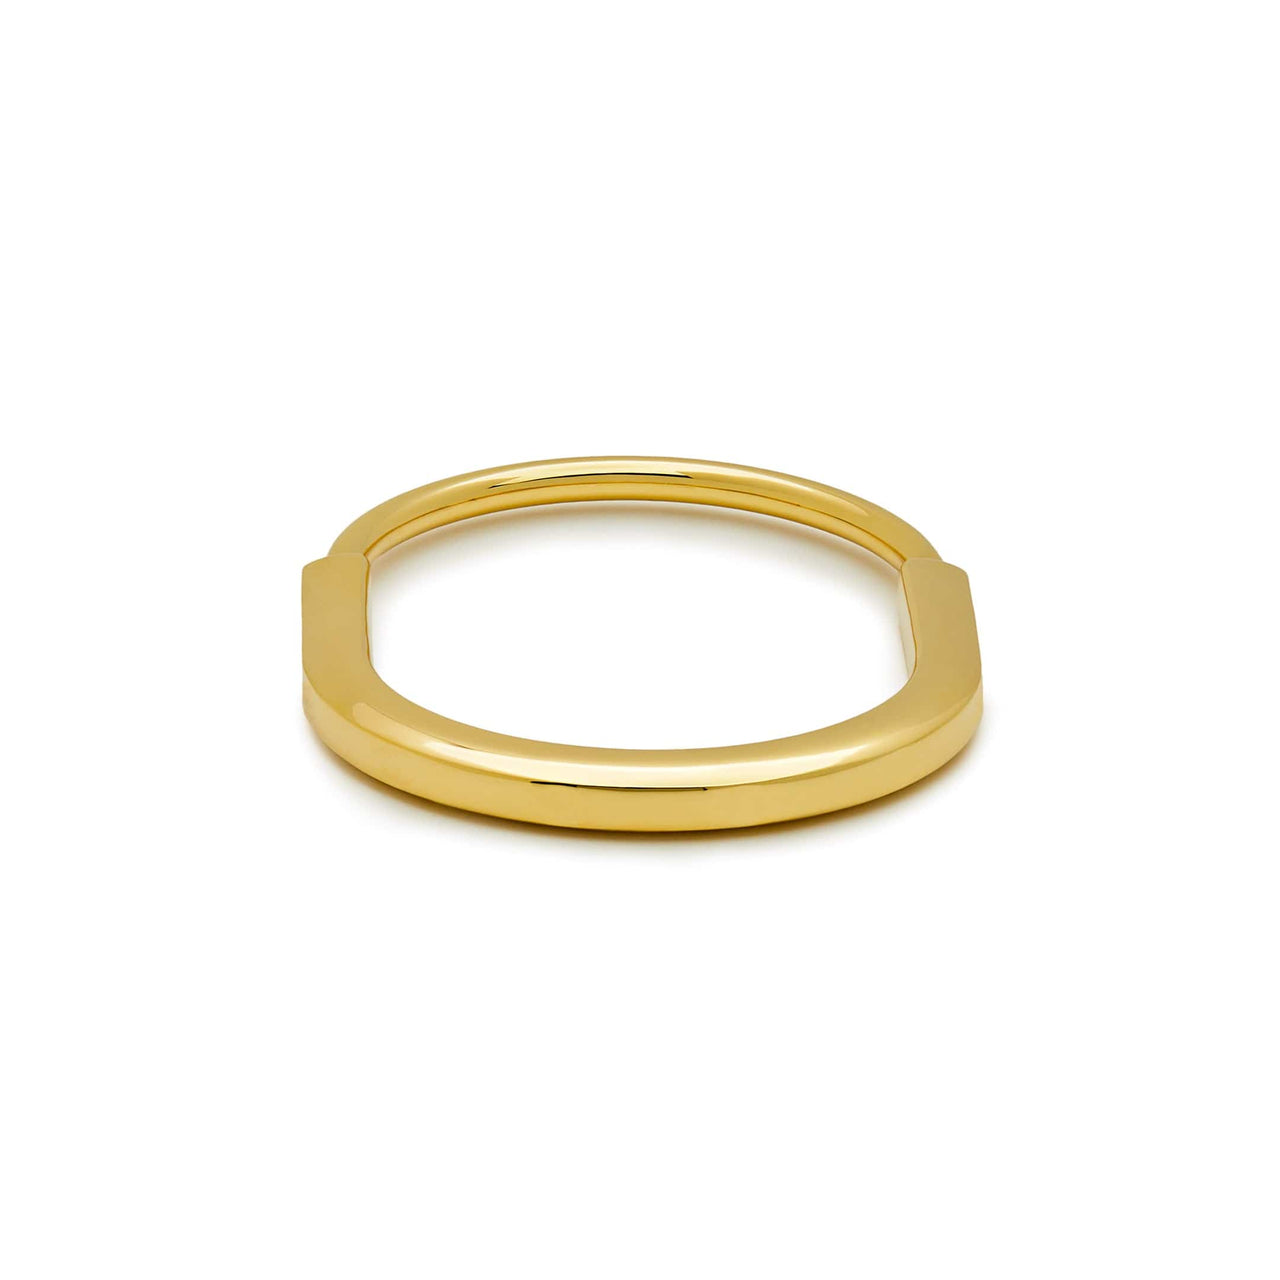 Tiffany & Co. Lock Bangle in Yellow Gold 70185636 Wrist Aficionado